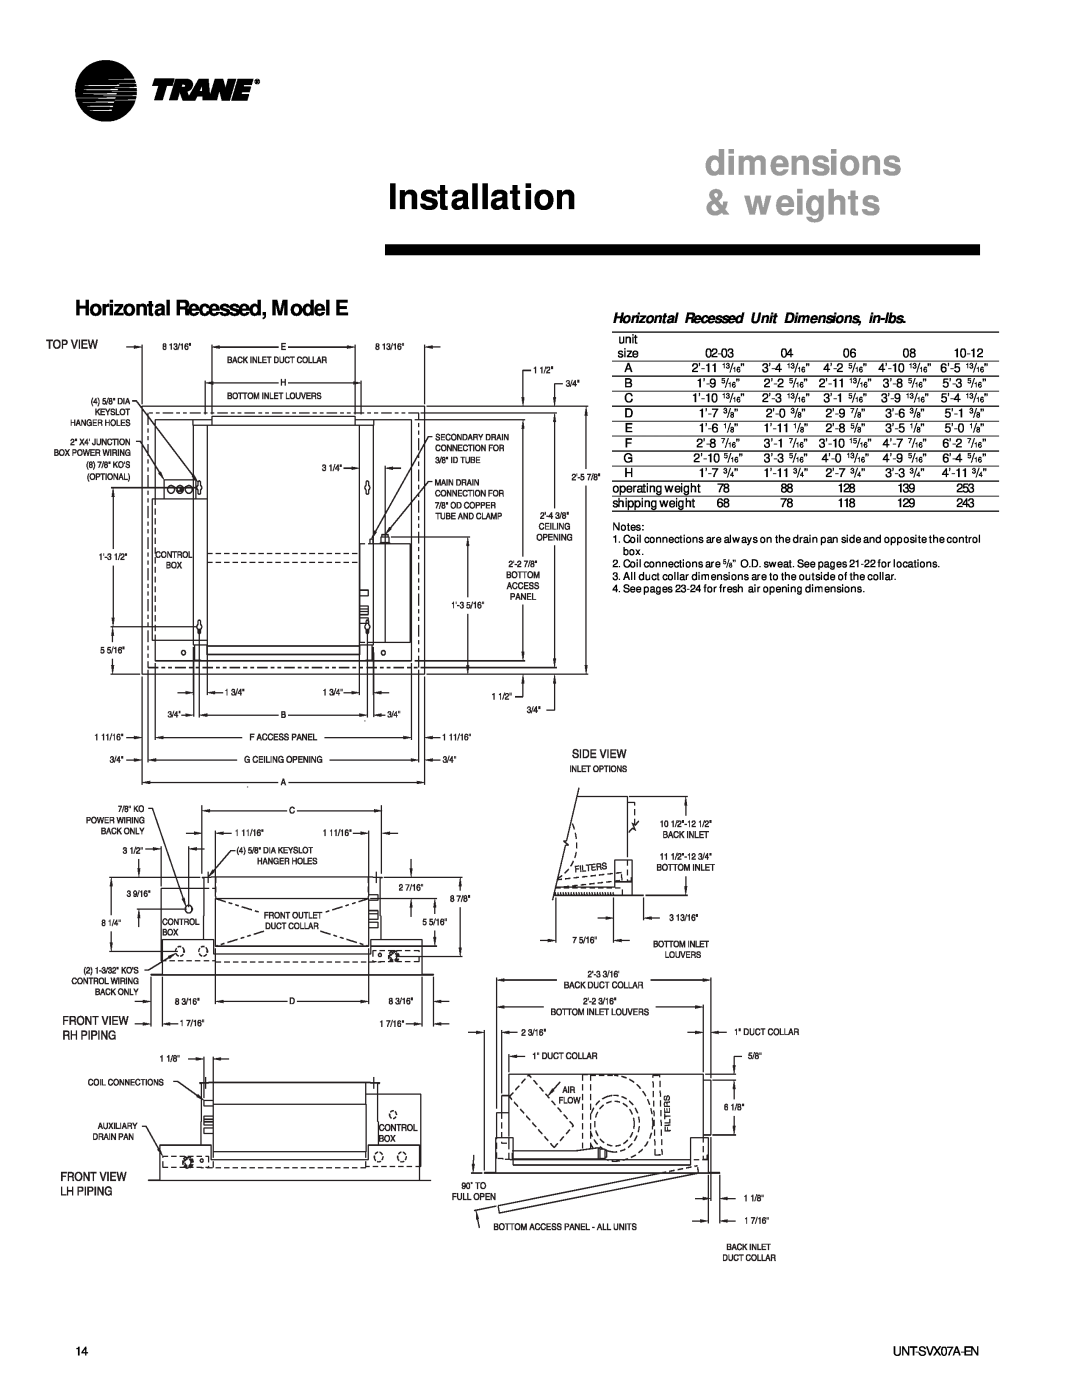 Trane UNT-SVX07A-EN manual Horizontal Recessed, Model E, Installation, dimensions, weights 